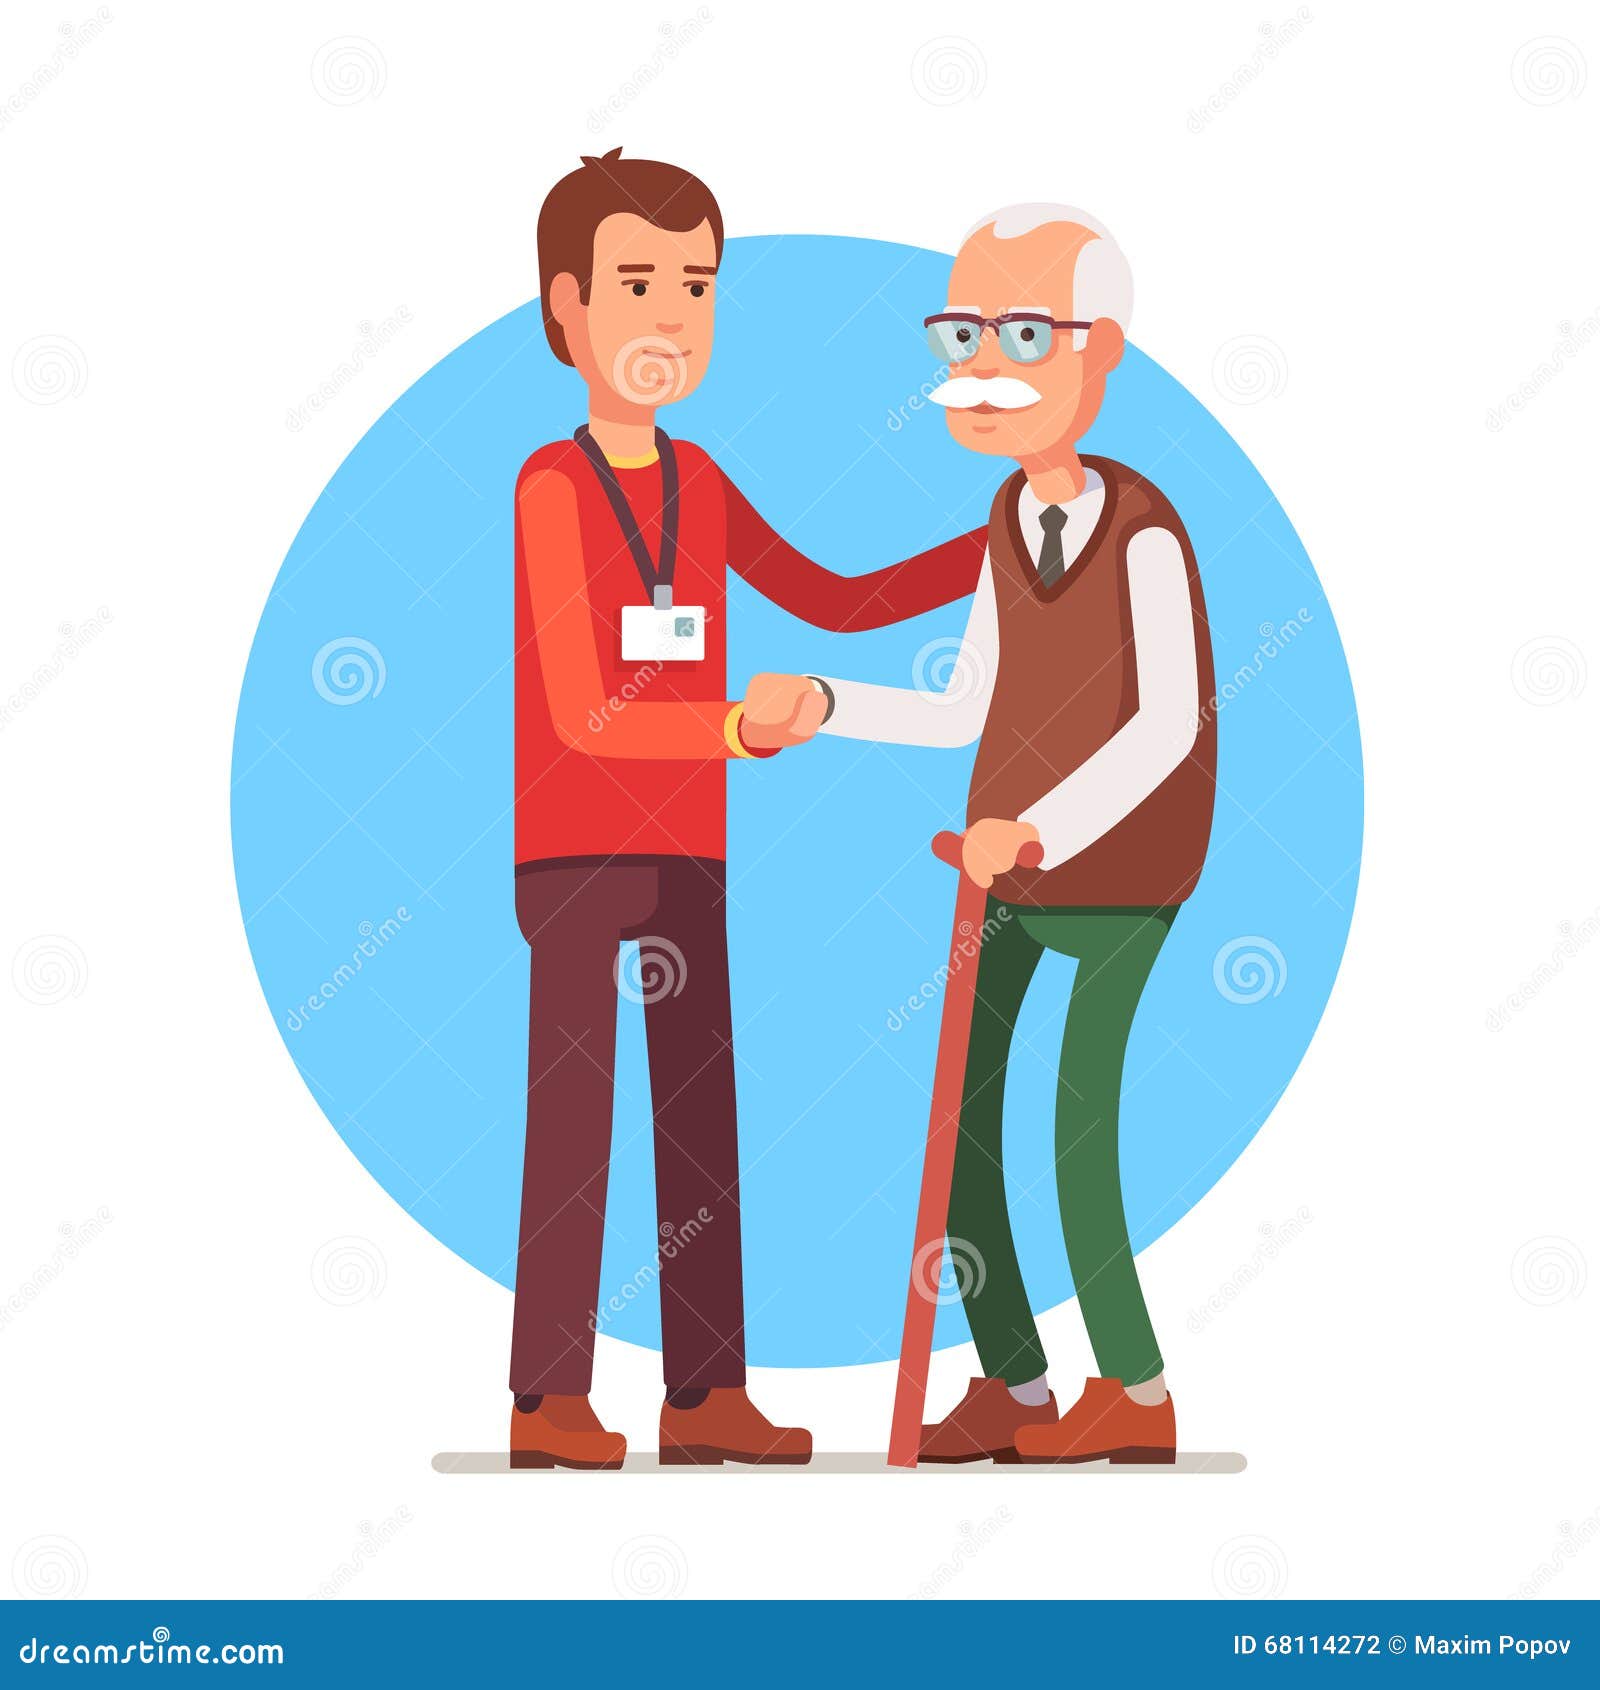 social worker helping elder grey haired man